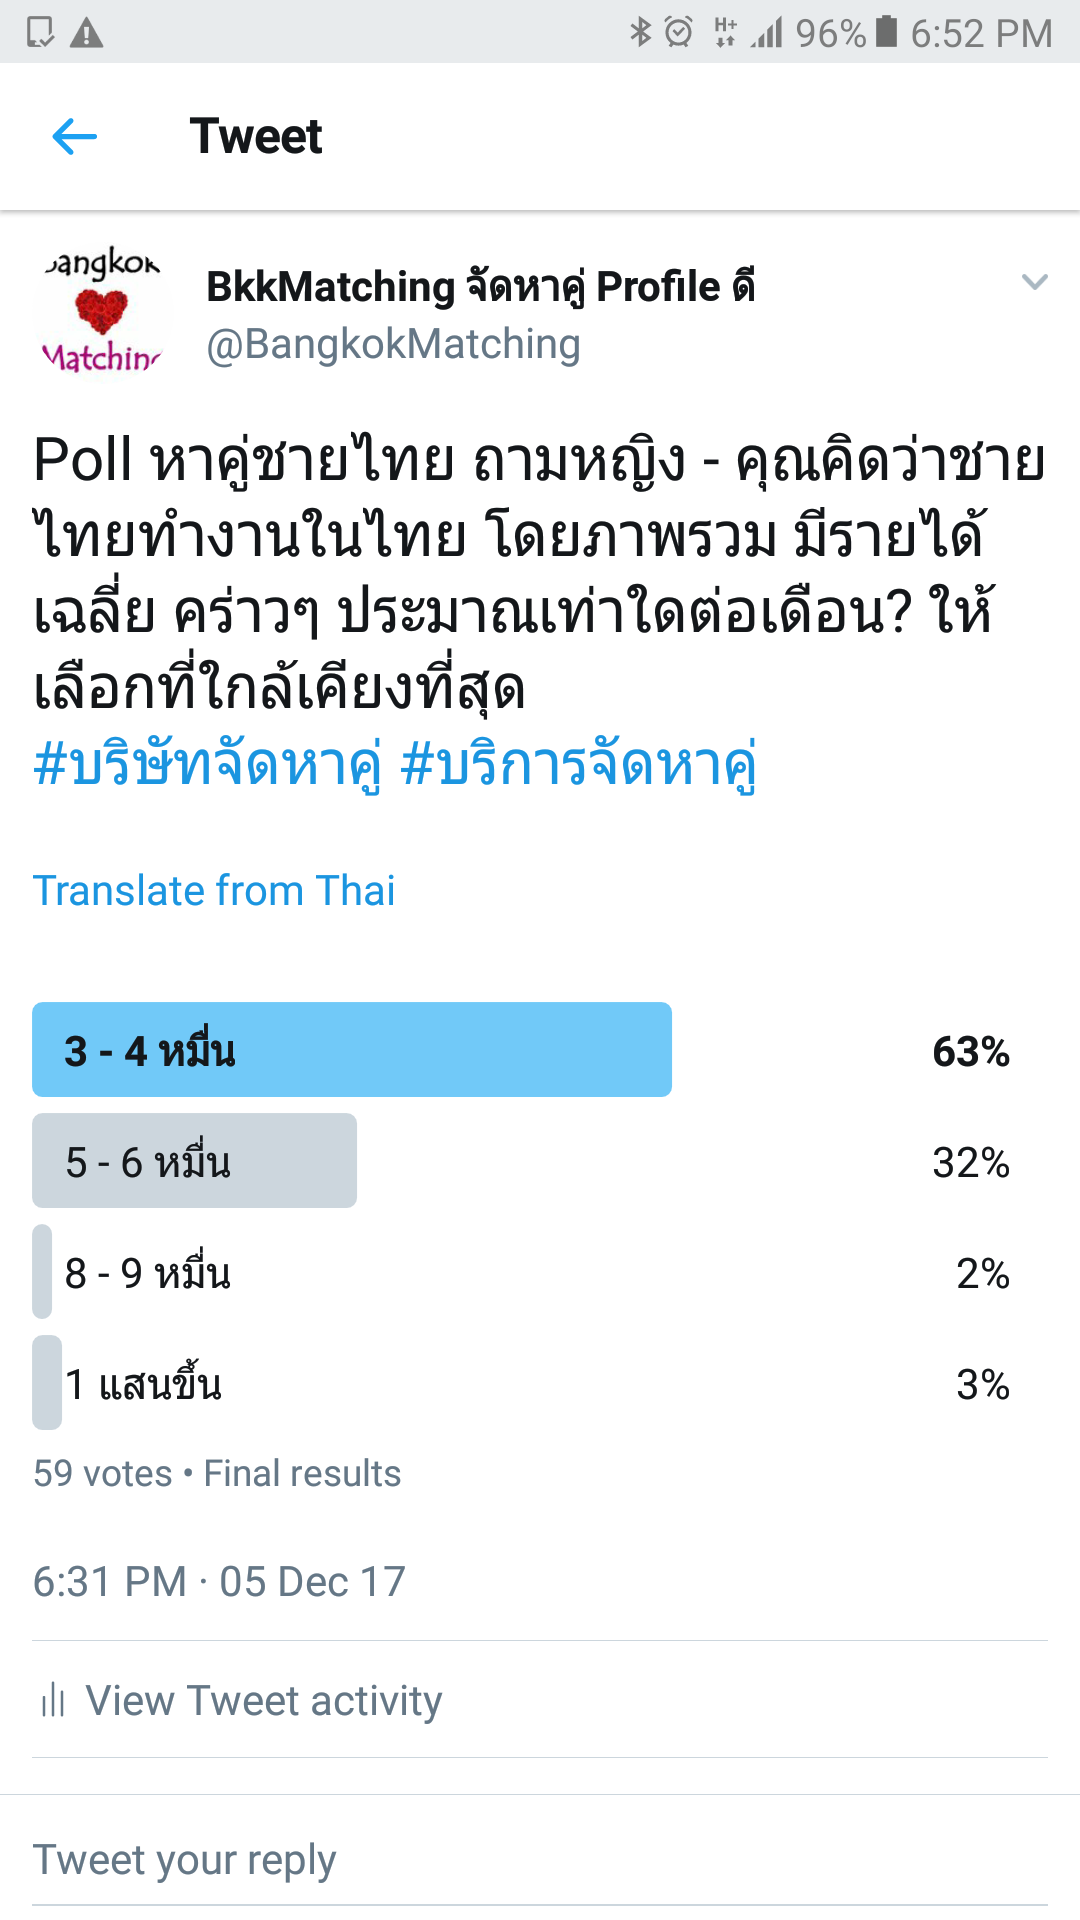 Poll หาคู่ บริษัทจัดหาคู่ แบงคอก แมทชิ่ง ถามว่าคิดว่าชายไทยได้รายได้เดือนเท่าใด